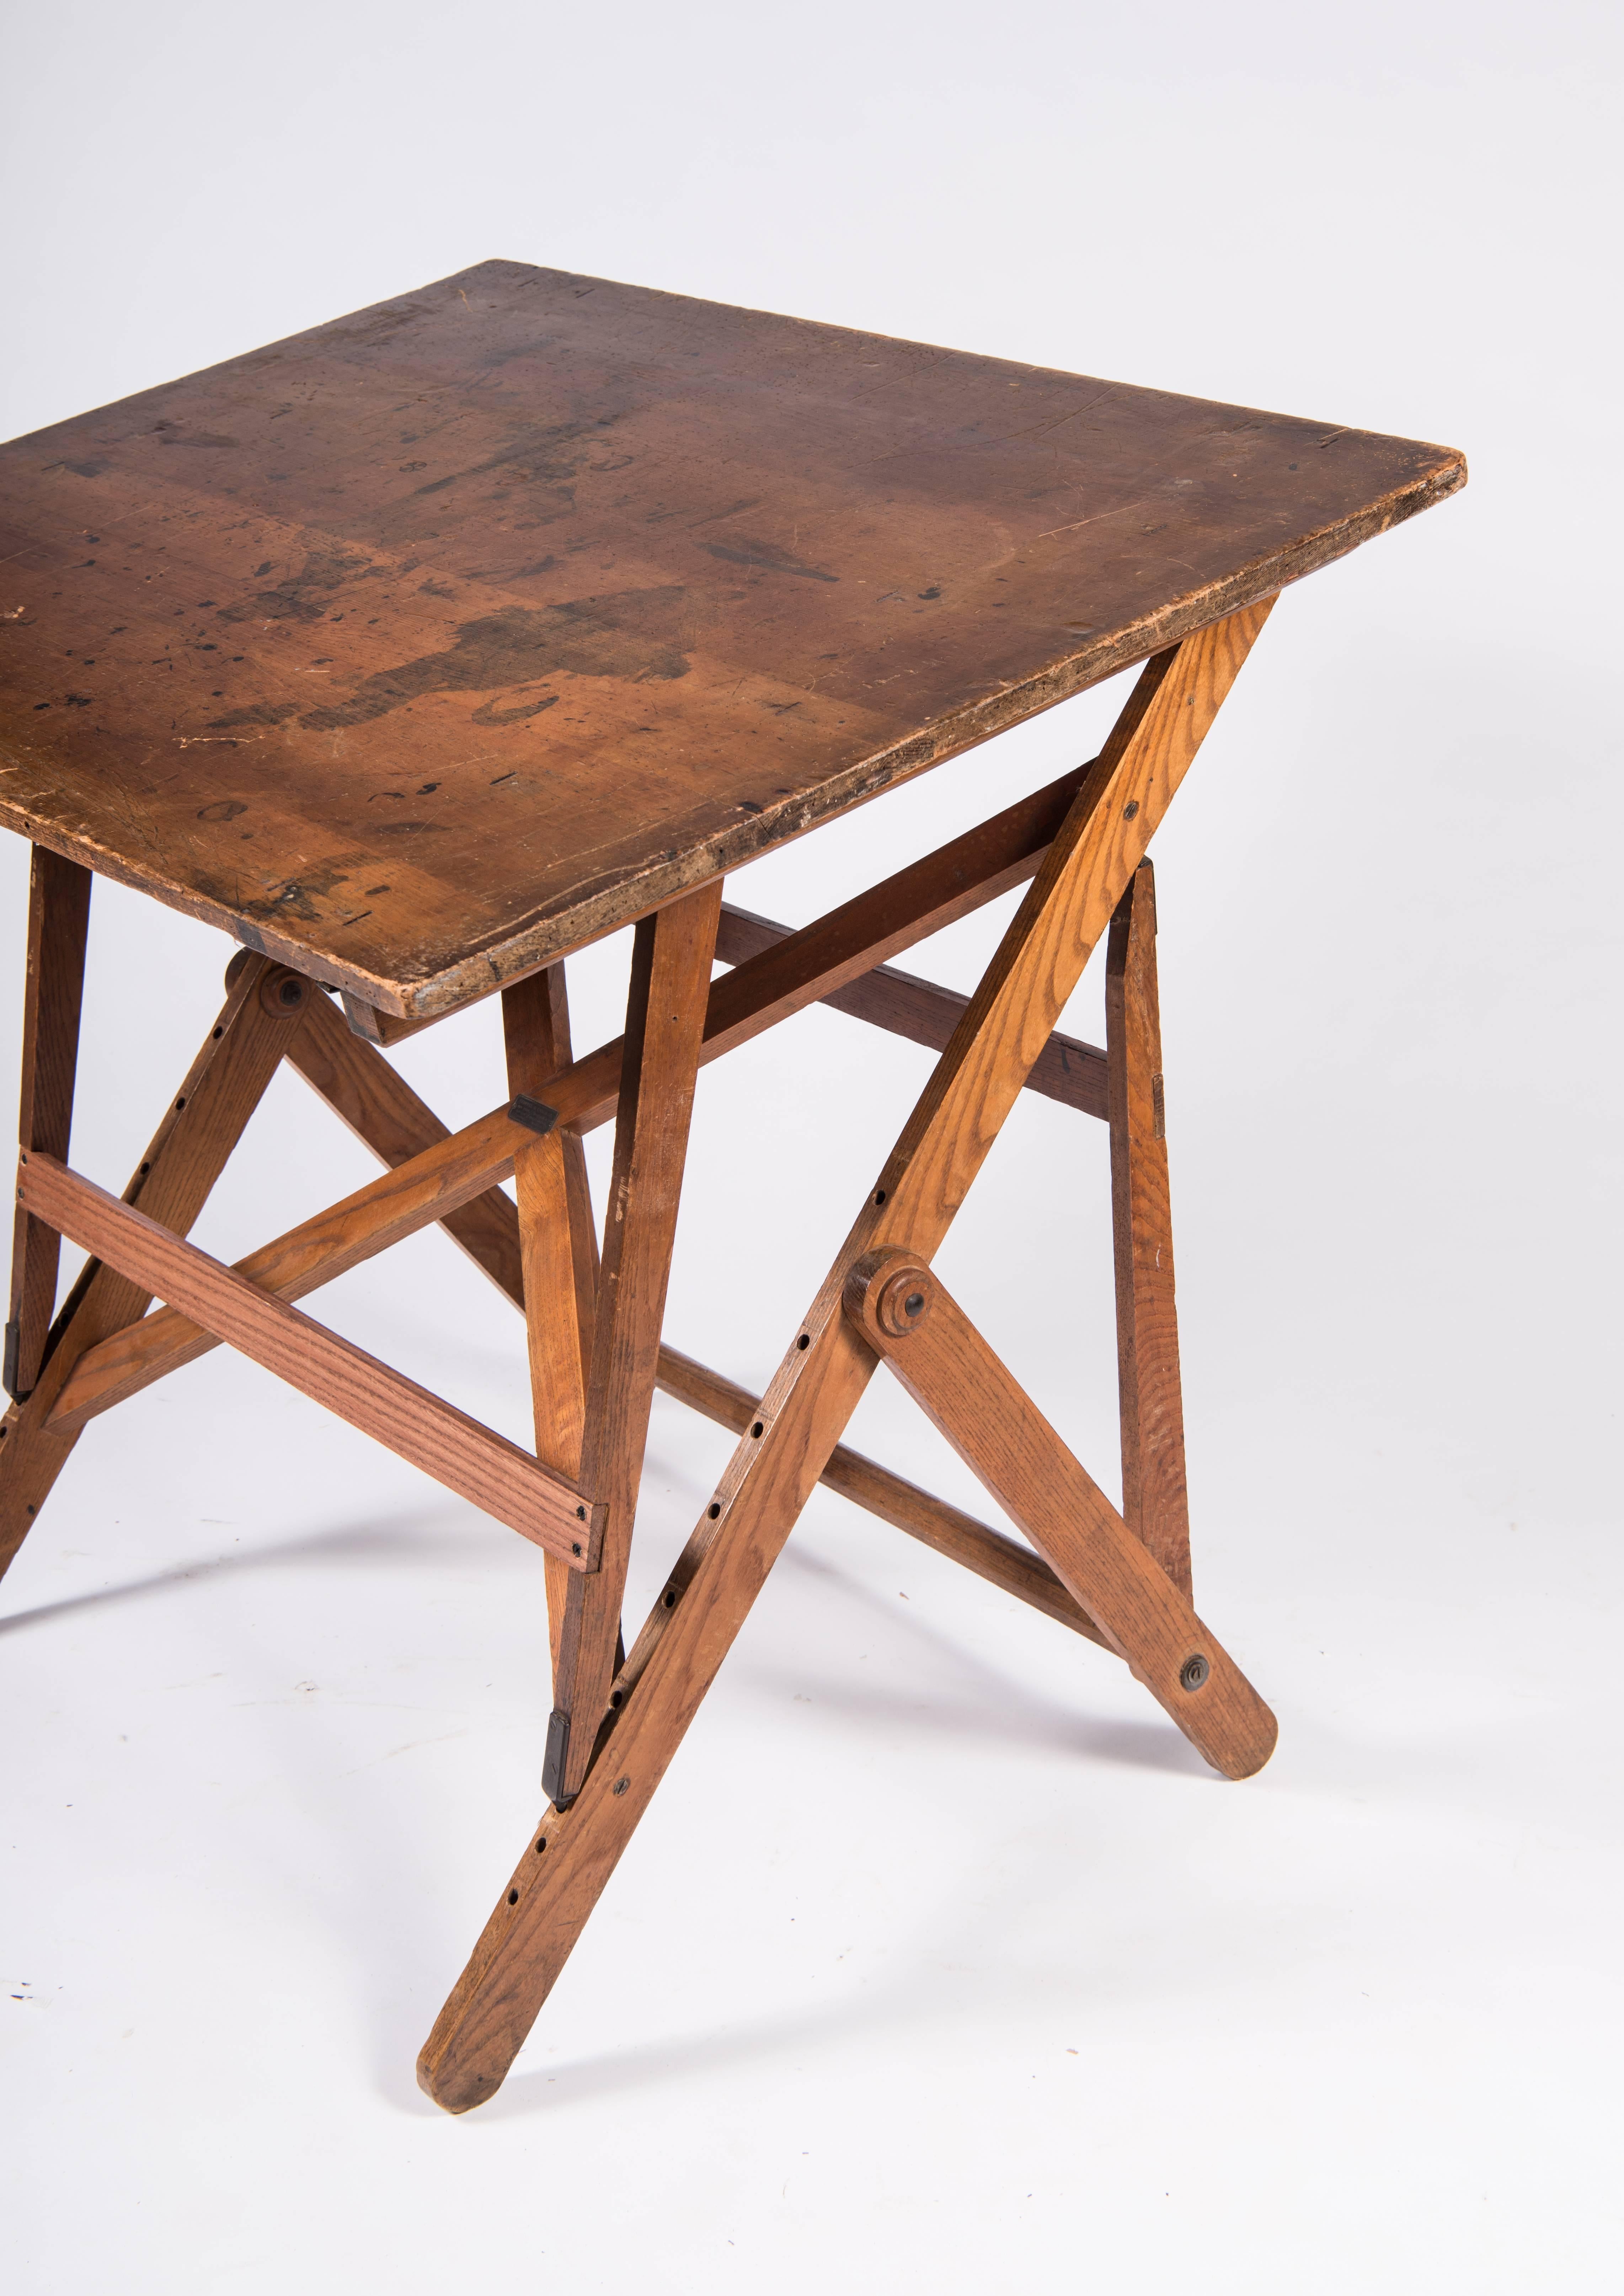 keuffel & esser drafting table for sale